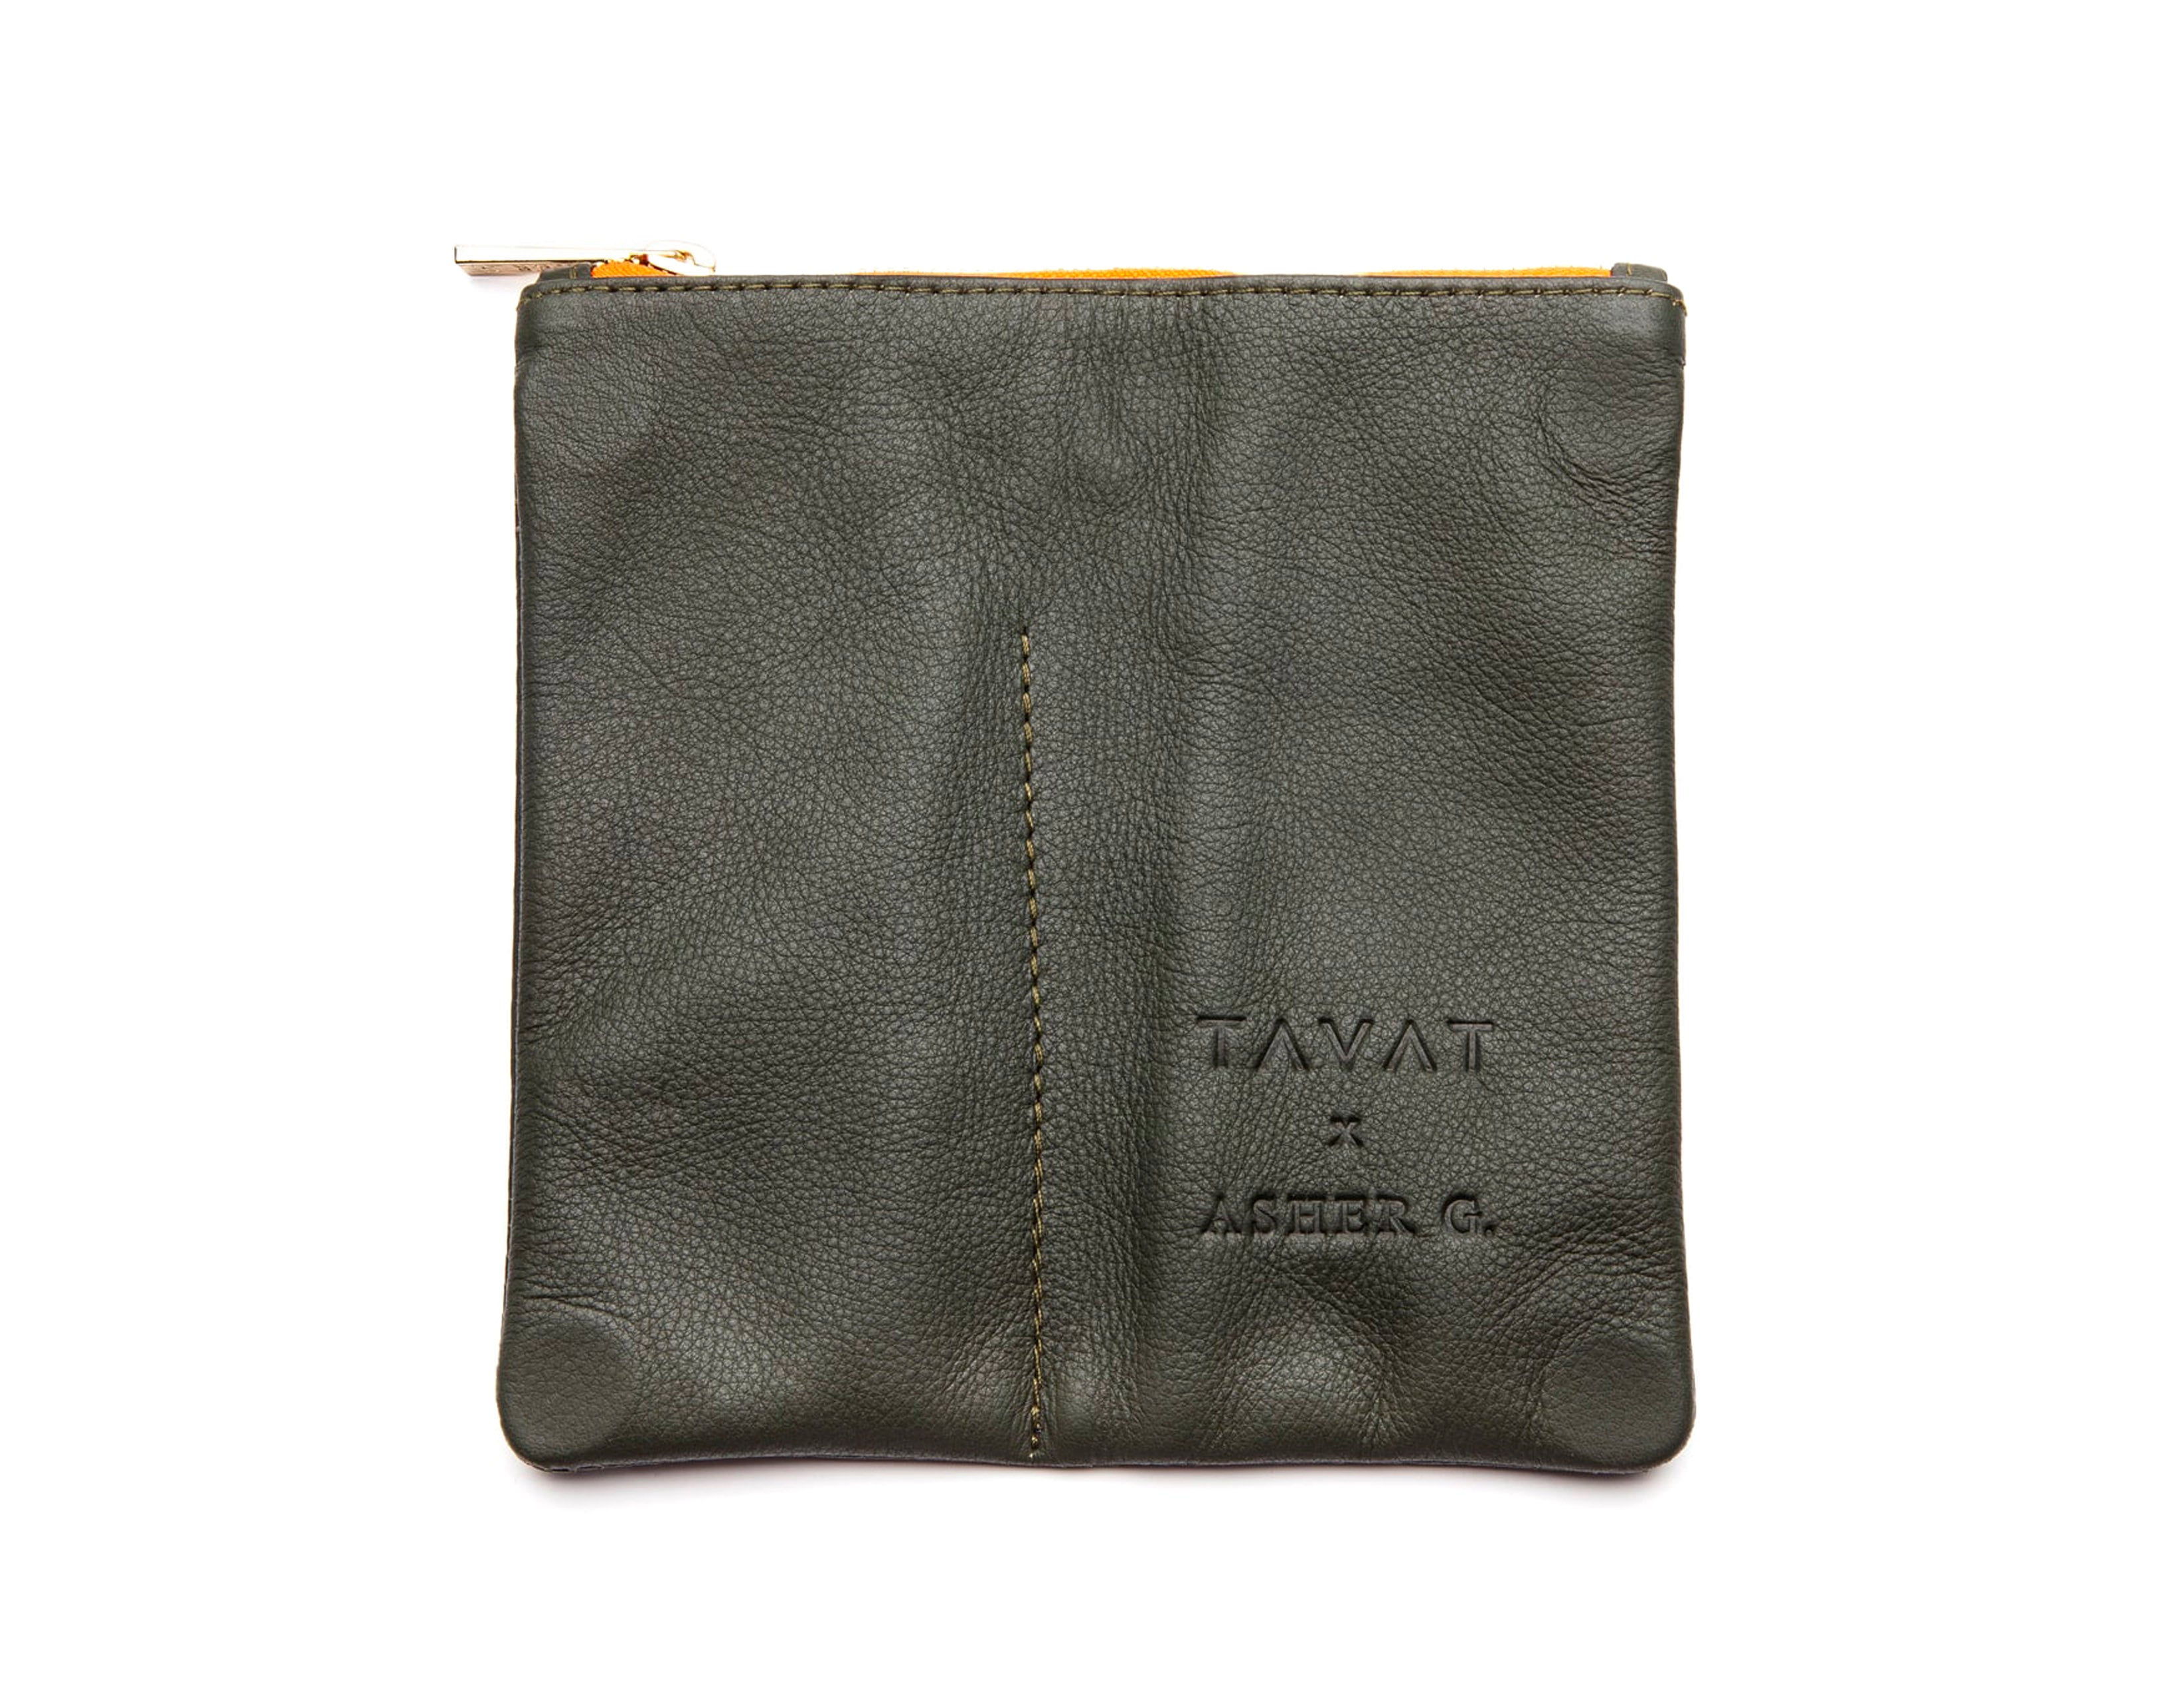 TAVAT x Asher G. Soft Pouch Leather -OLV(純手工製皮革眼鏡套)【Pre-order Now】